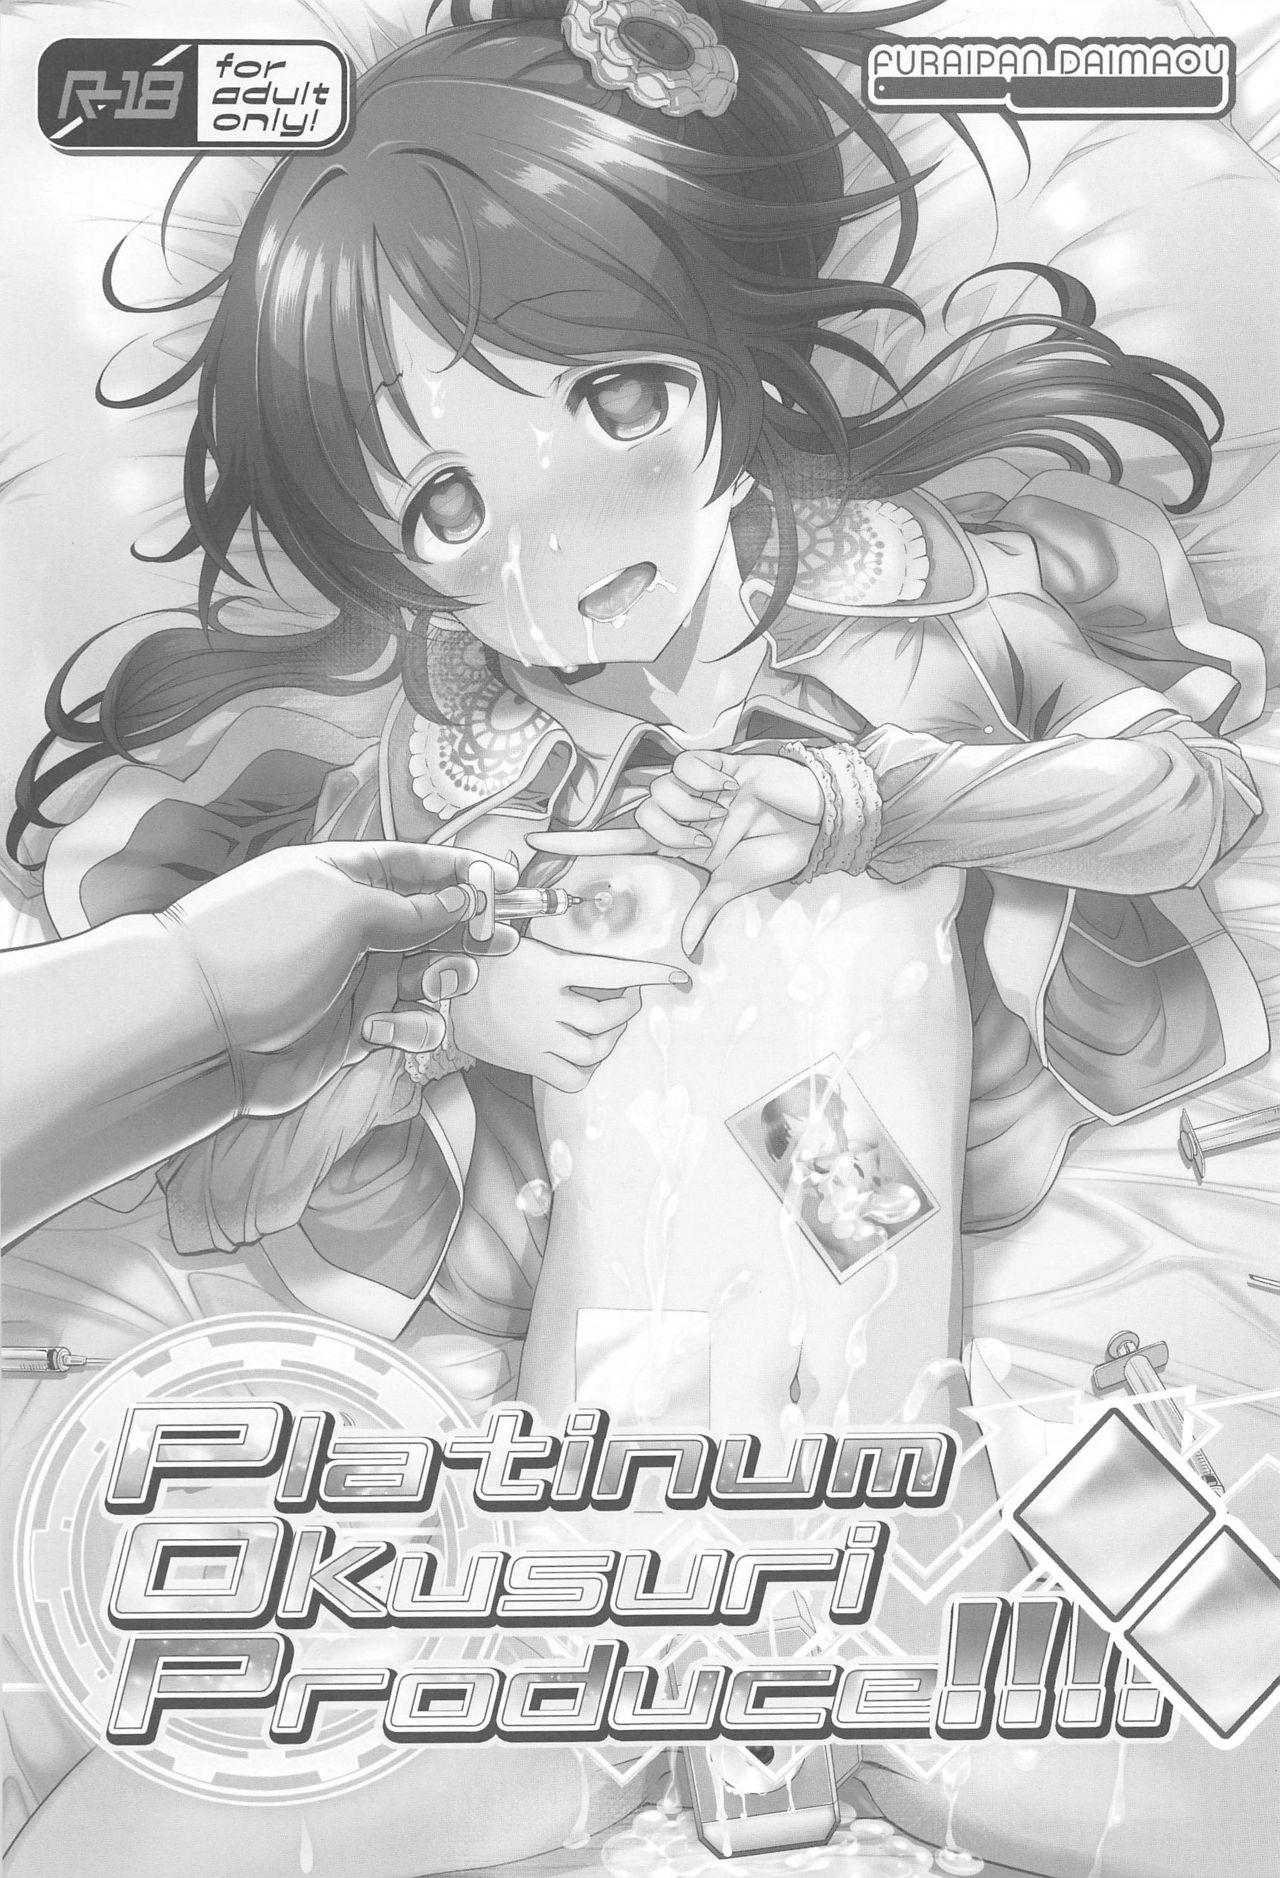 Platinum Okusuri Produce!!!! ◇◇ 1